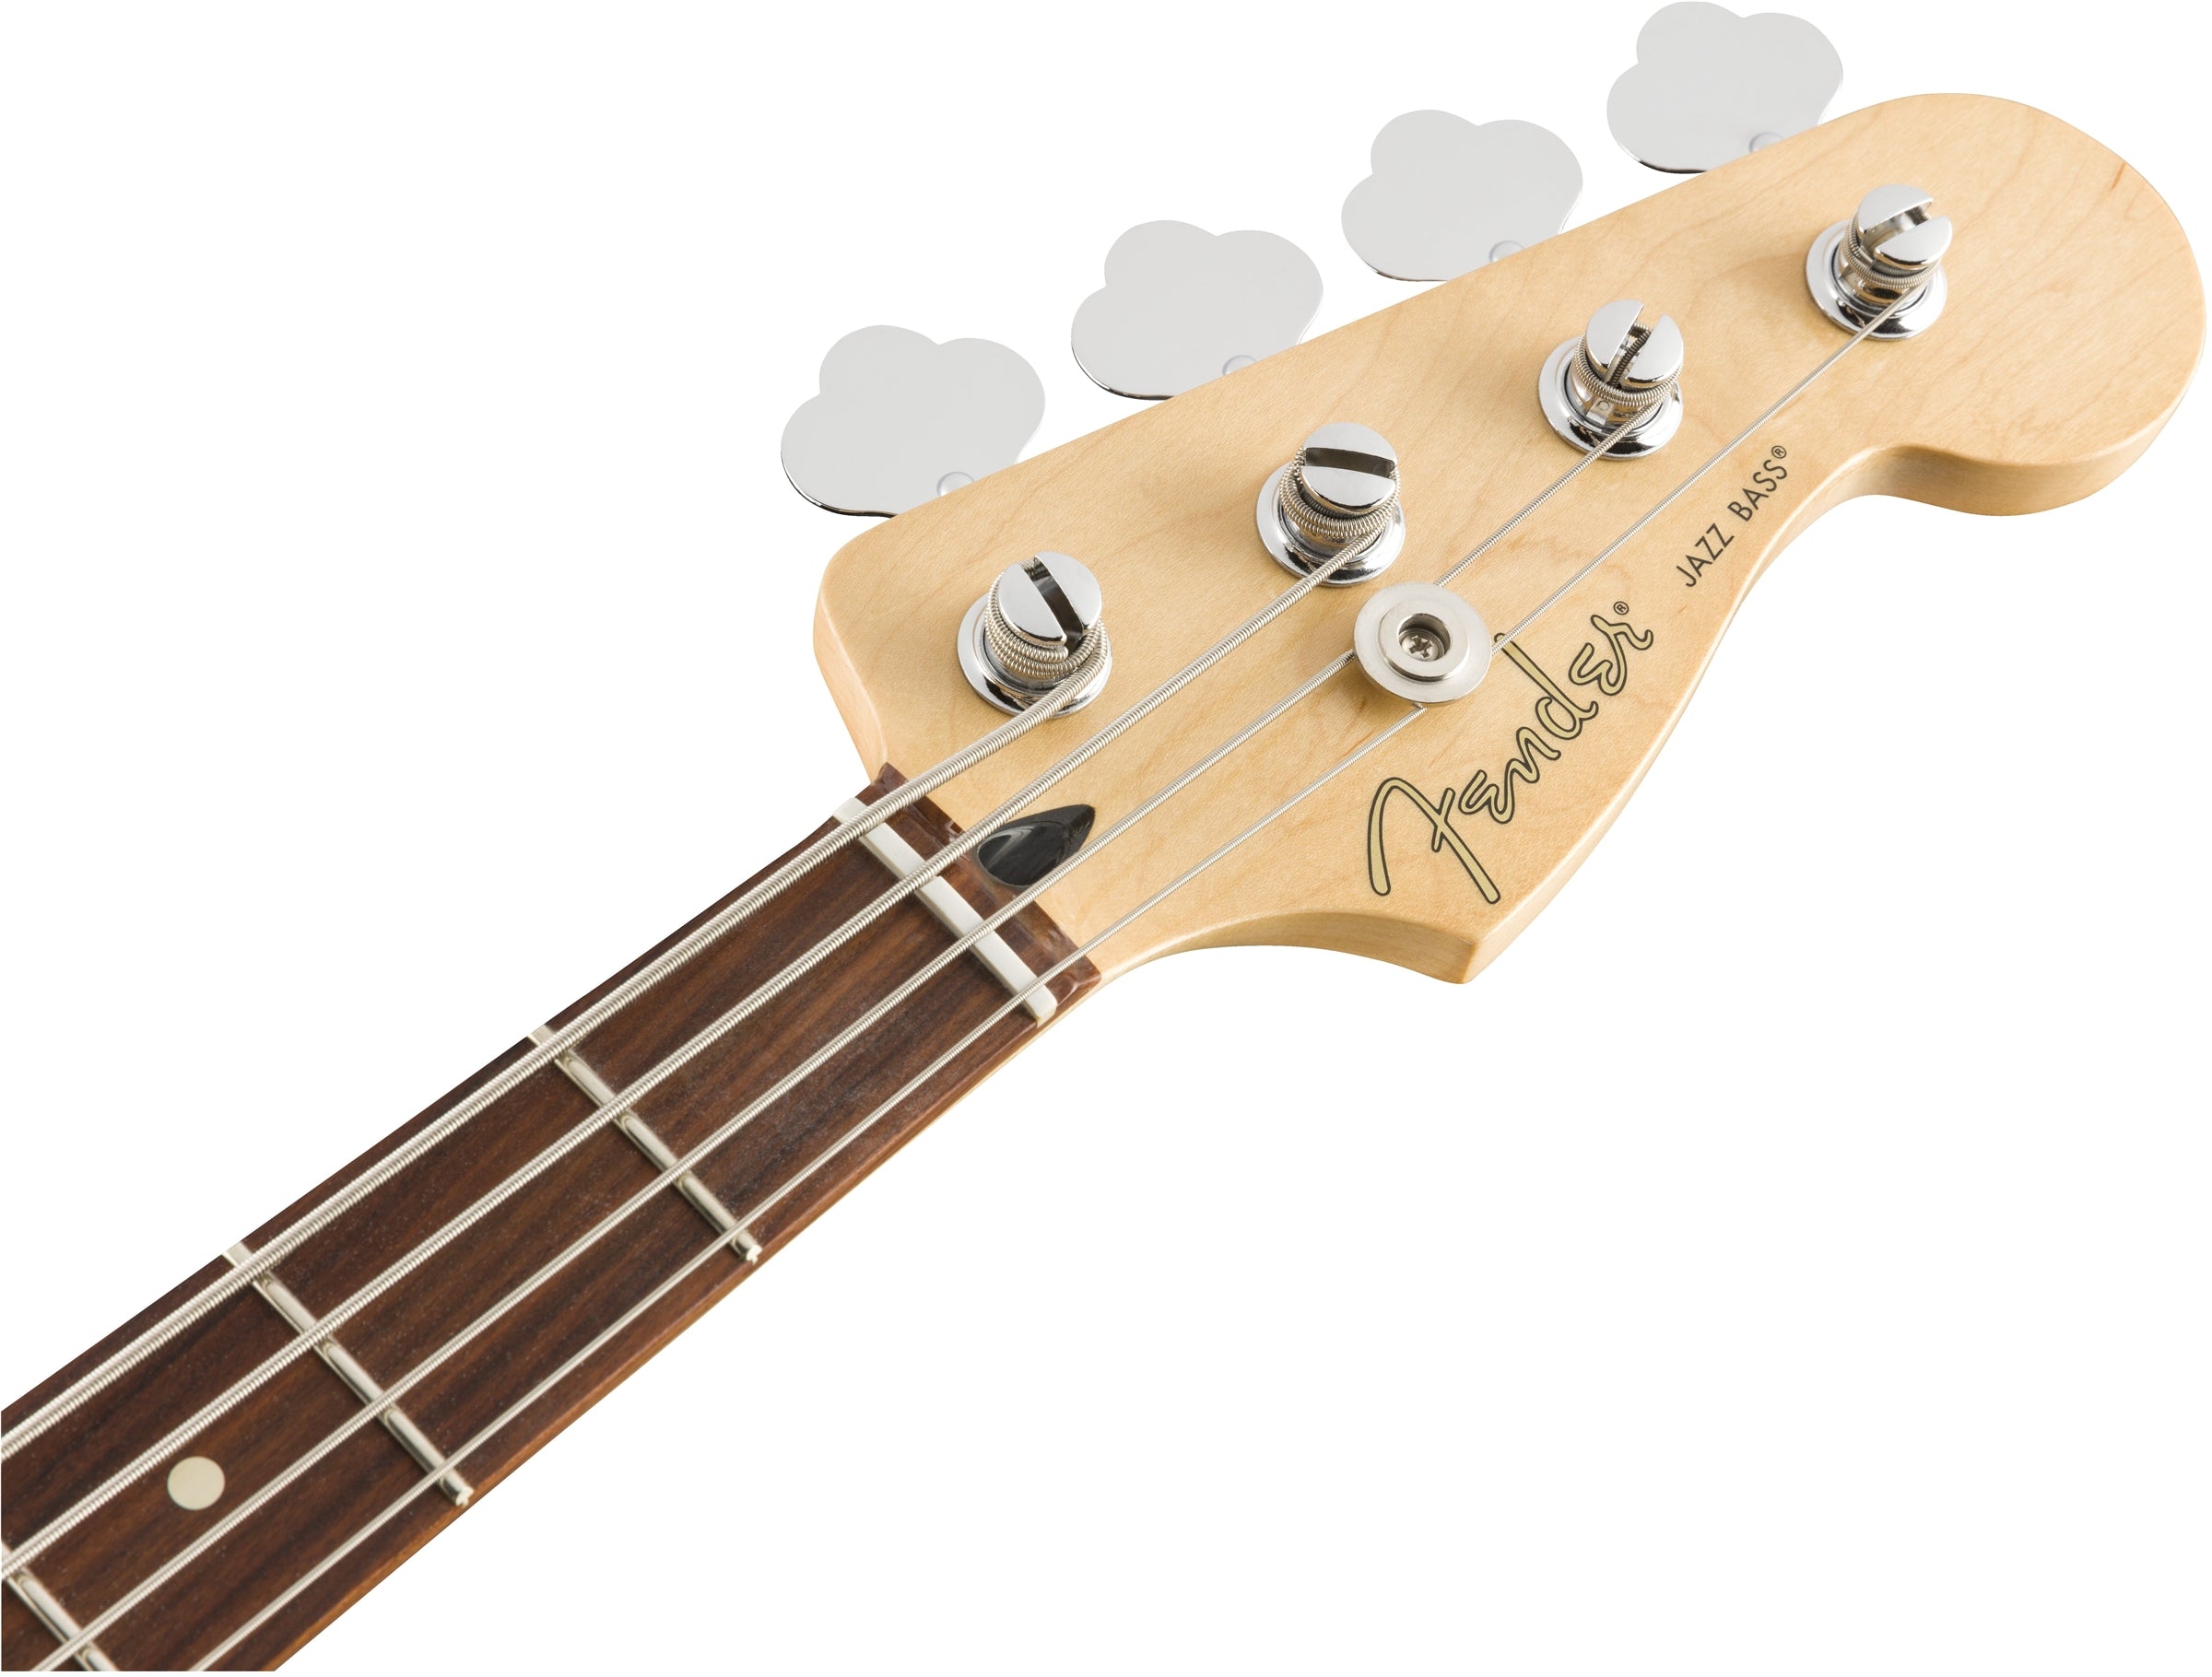 Fender Player Jazz Bass 4 String Electric Bass - 3 Tone Sunburst